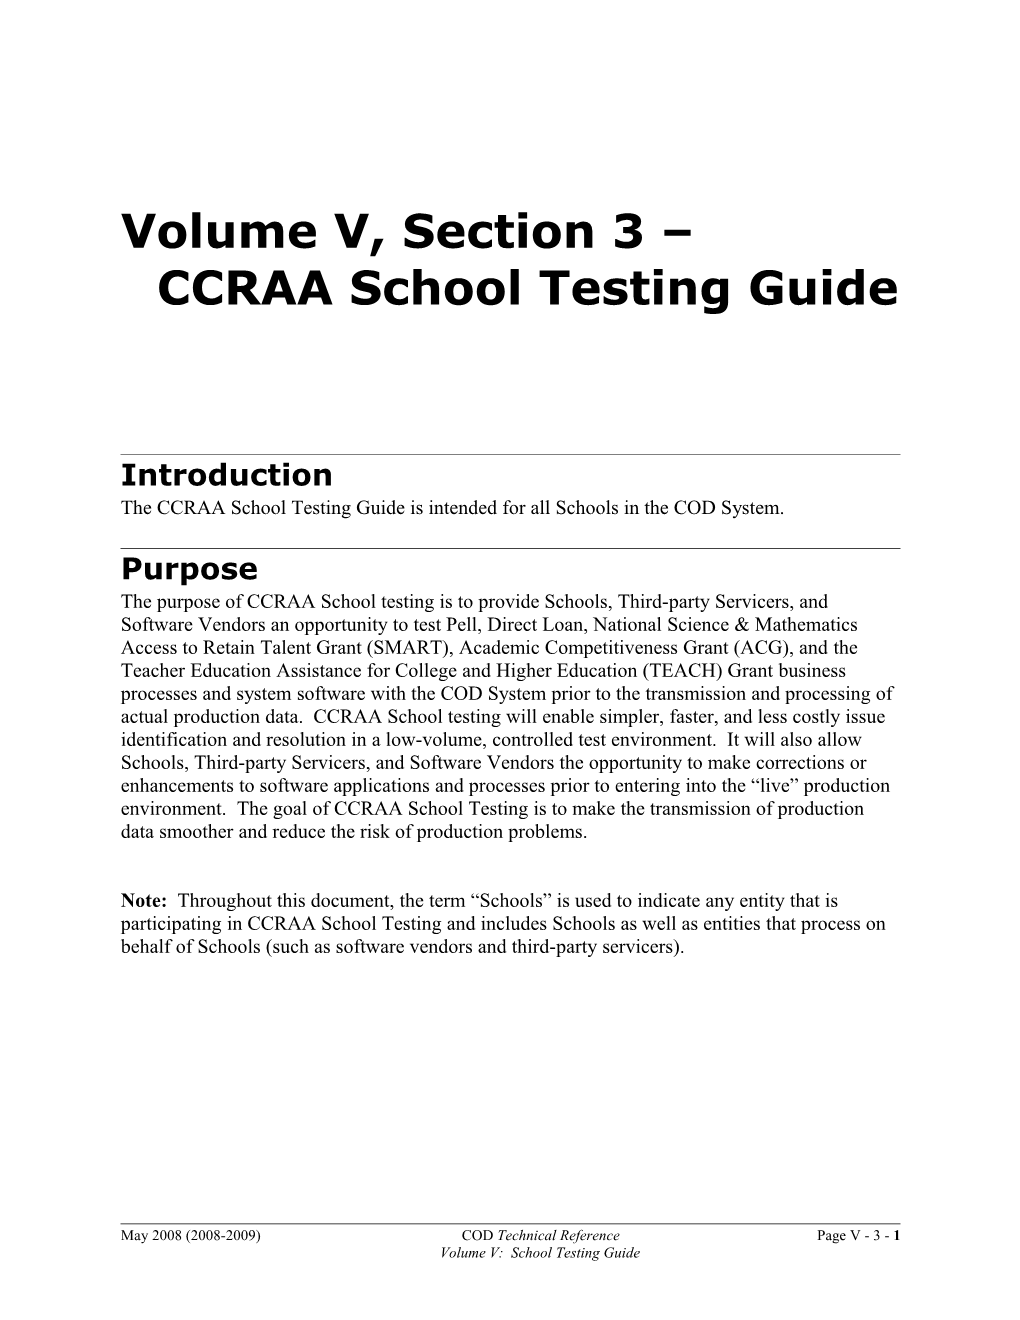 Volume V, Section 3 HERA School Testing Guide